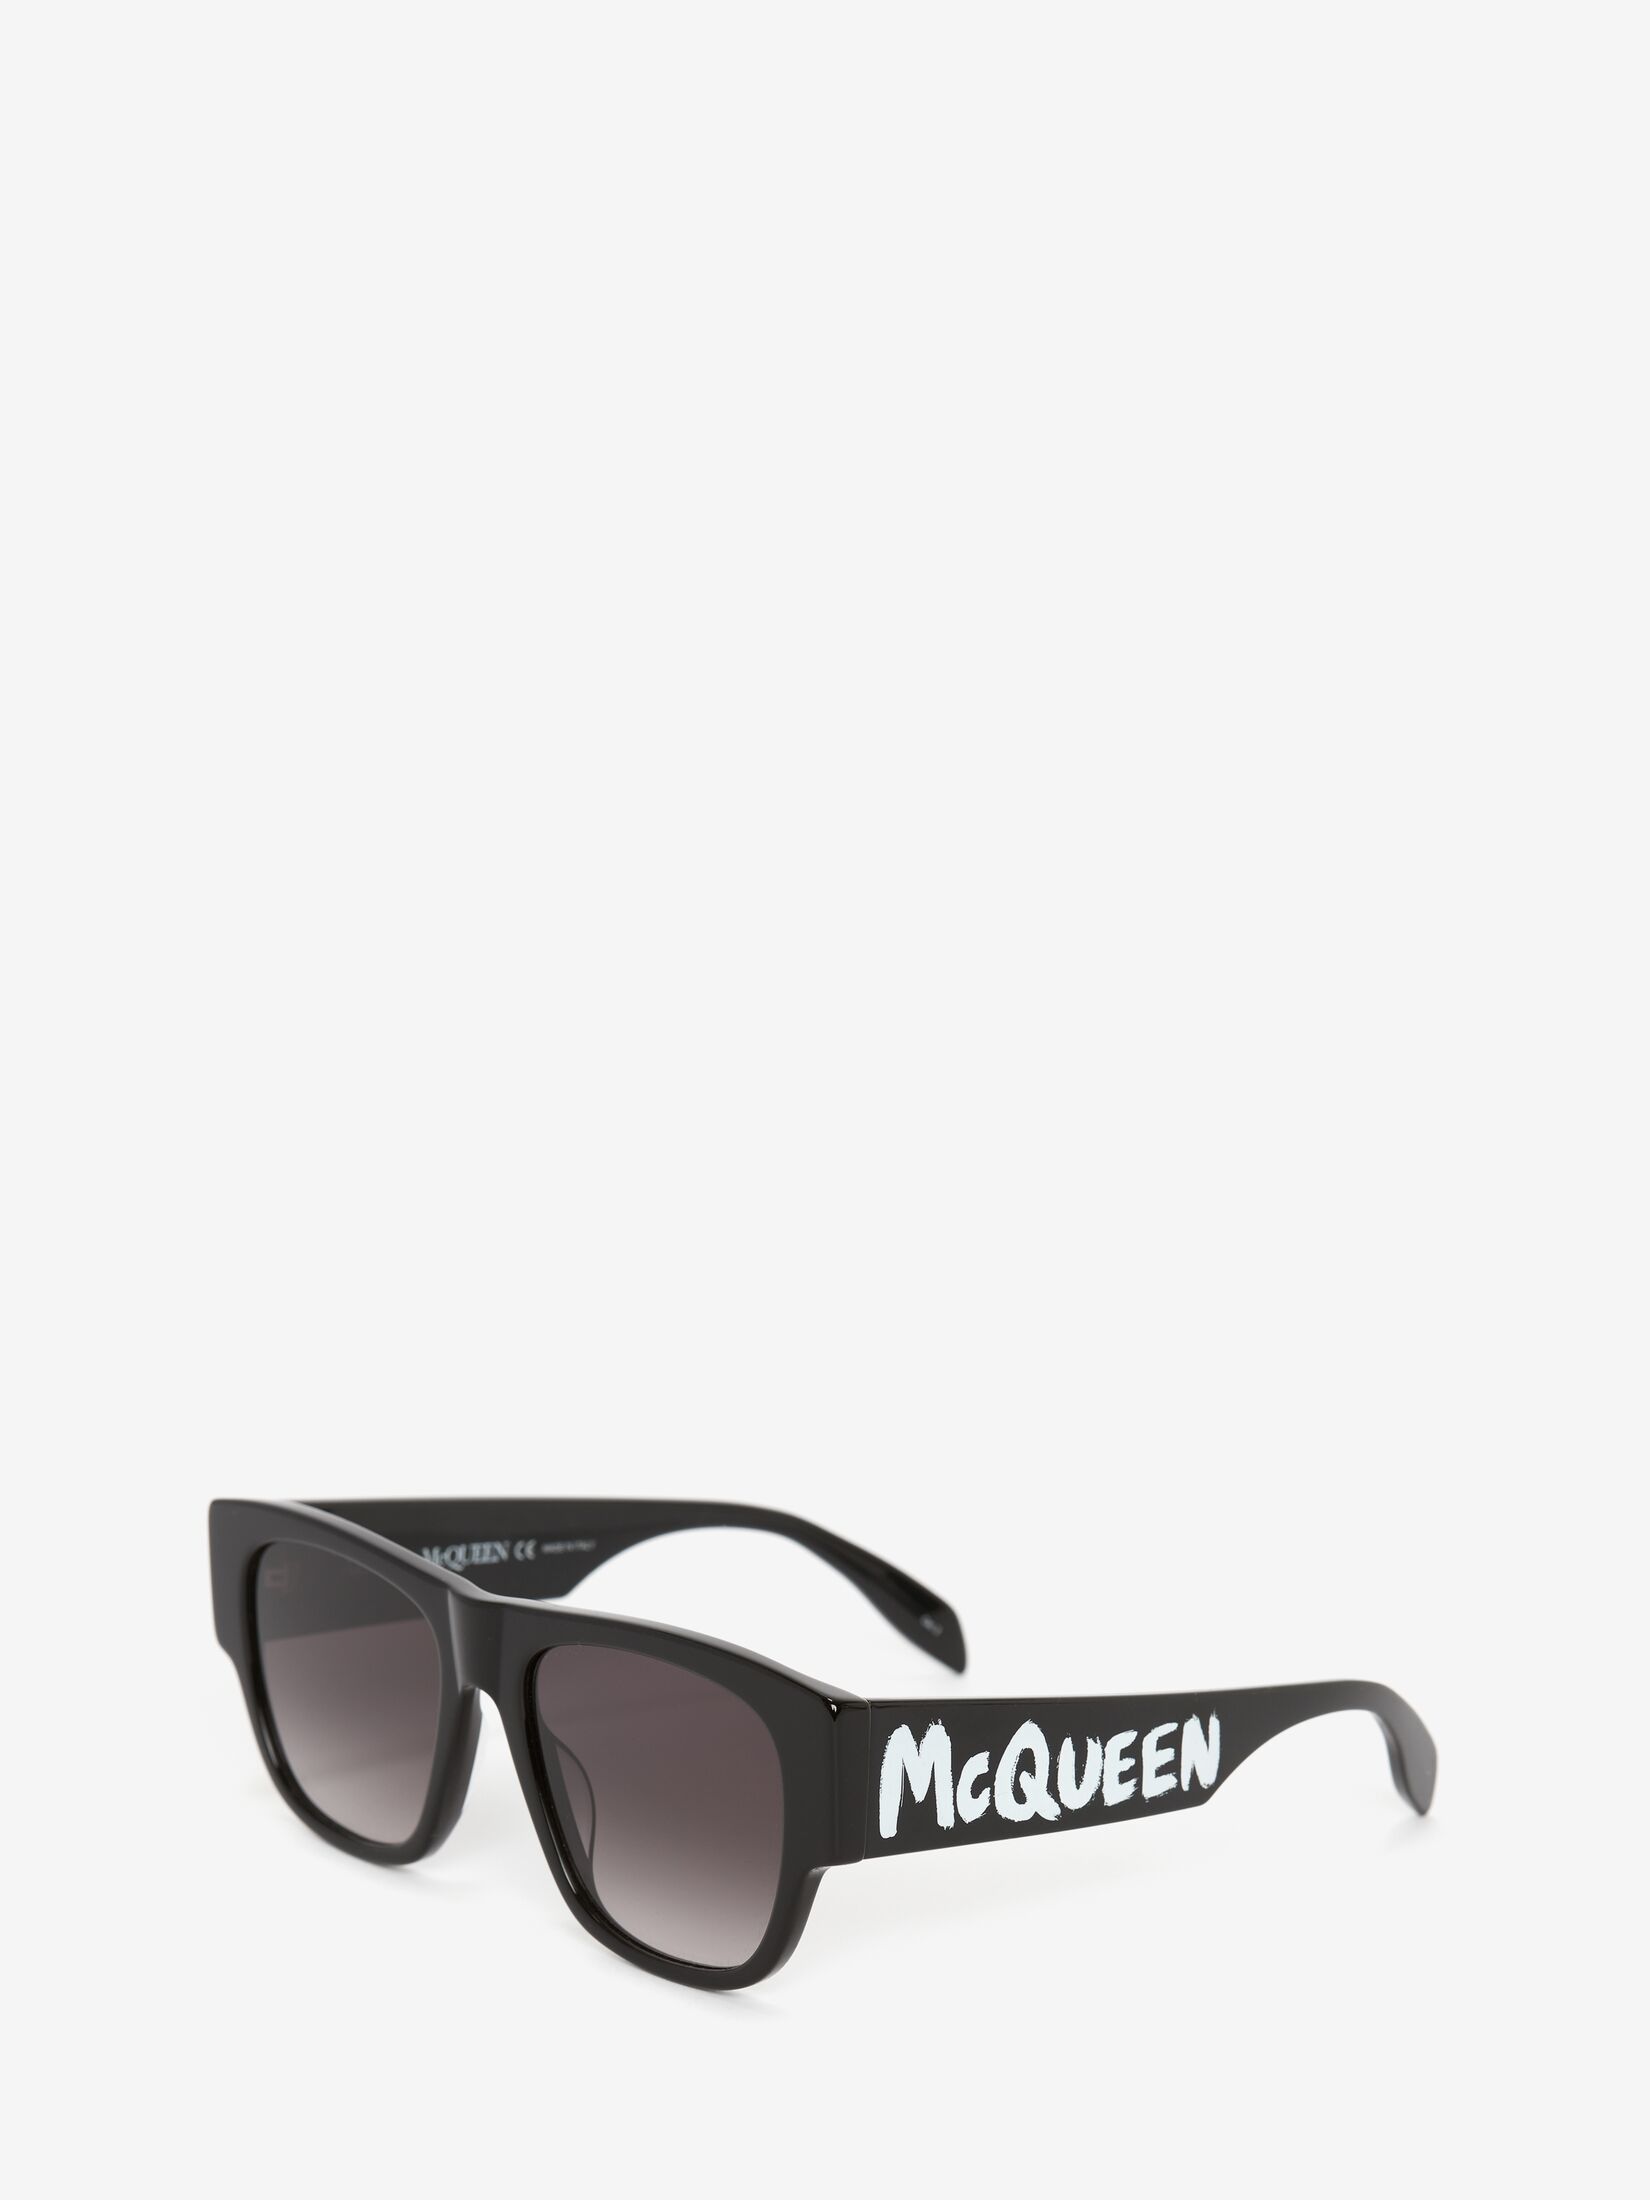 McQueen Graffiti Rectangular Sunglasses in Black/Red | Alexander 